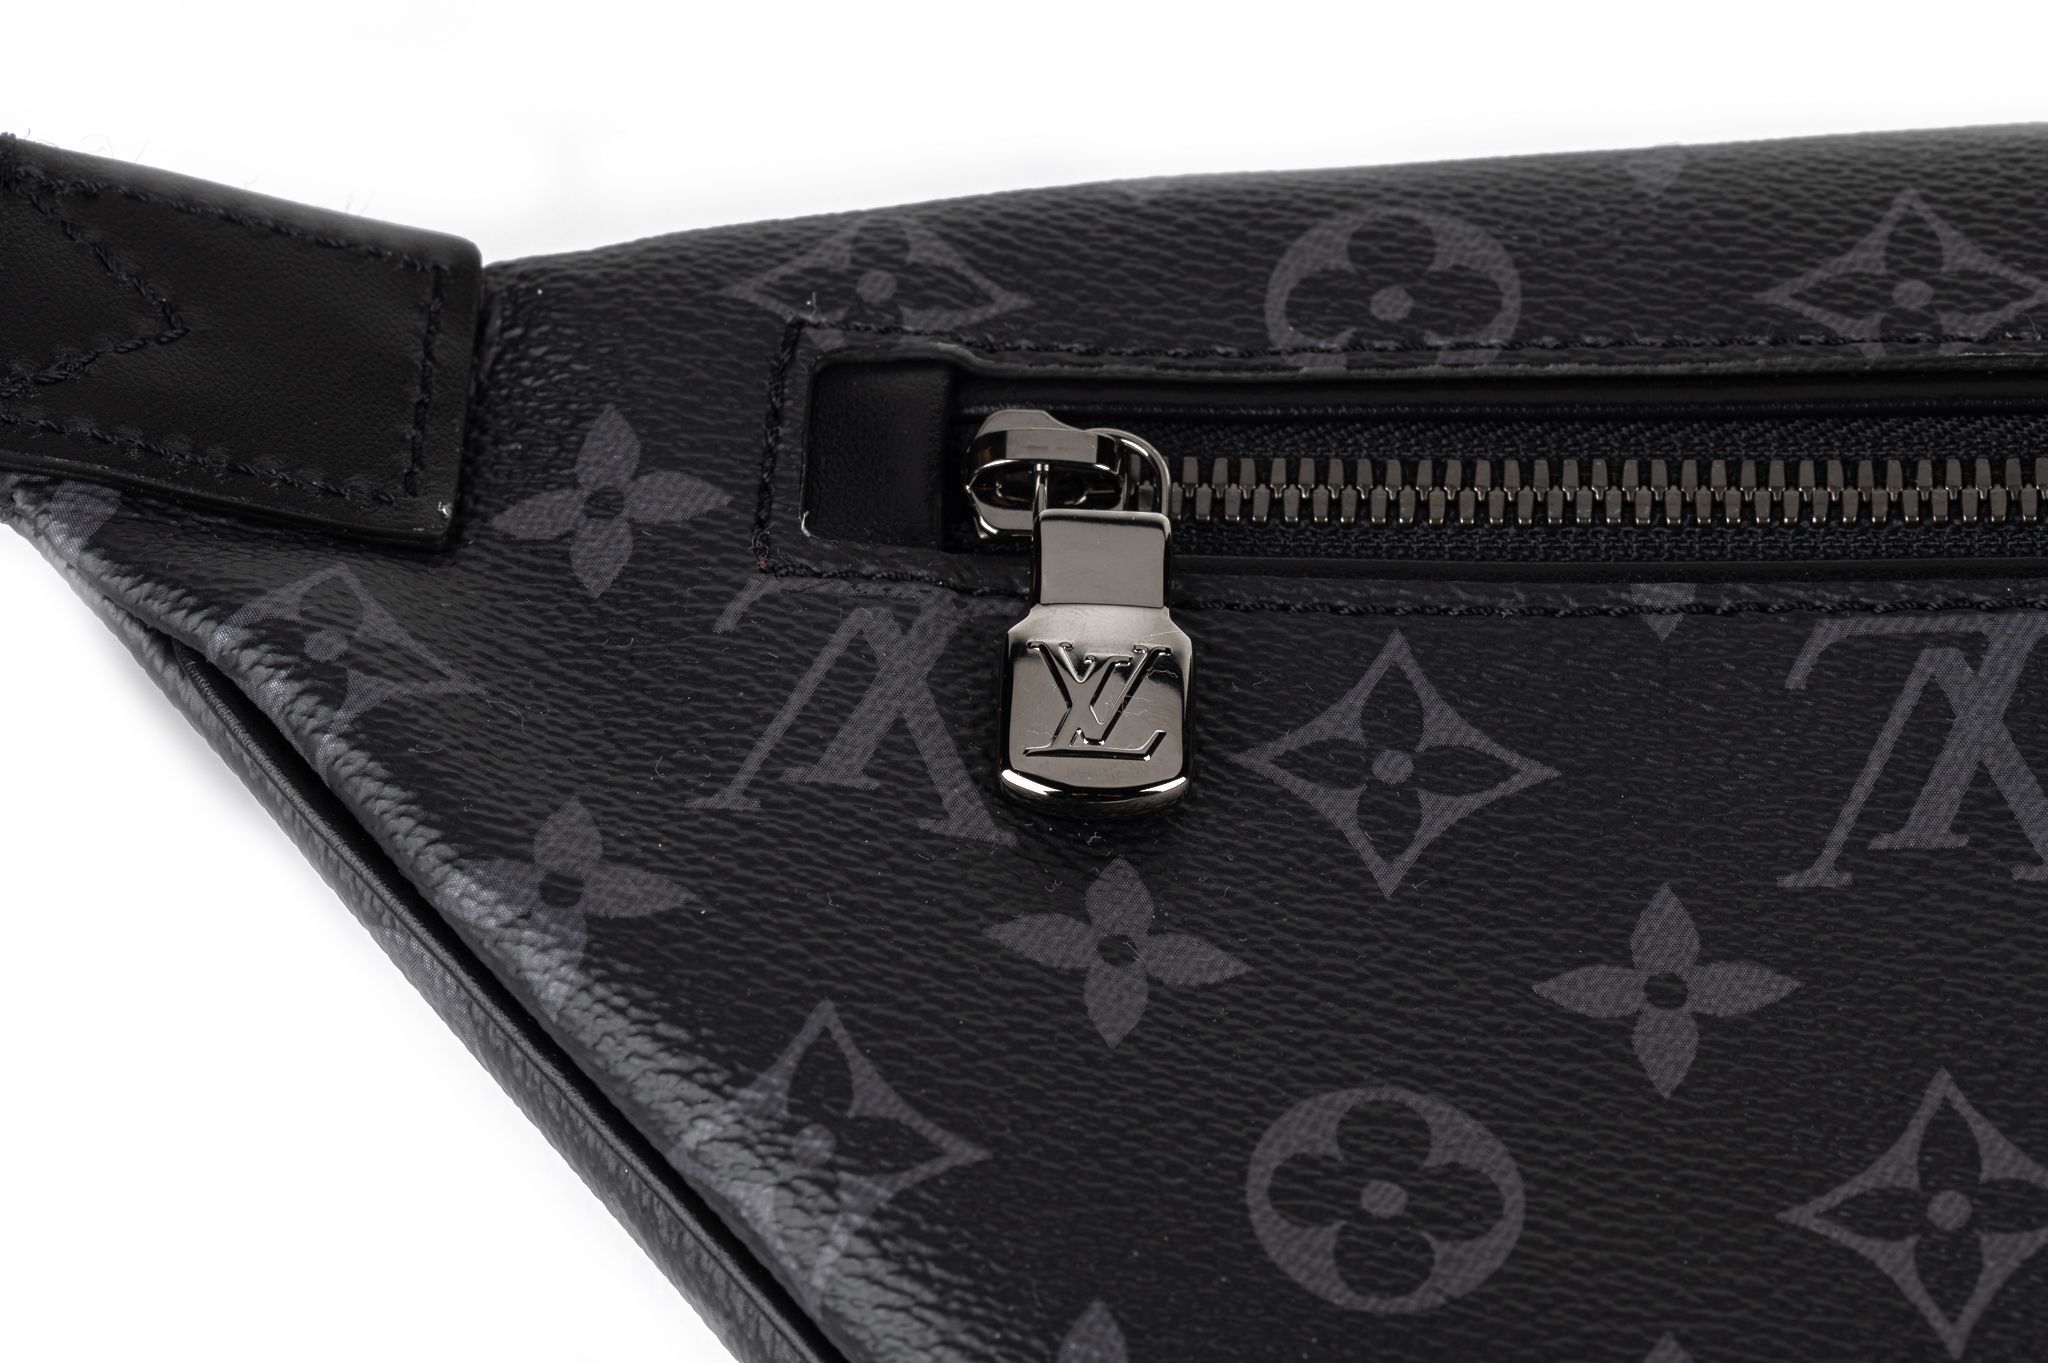 New Louis Vuitton Discovery Bum Bag - COME BAG BRANDNAME